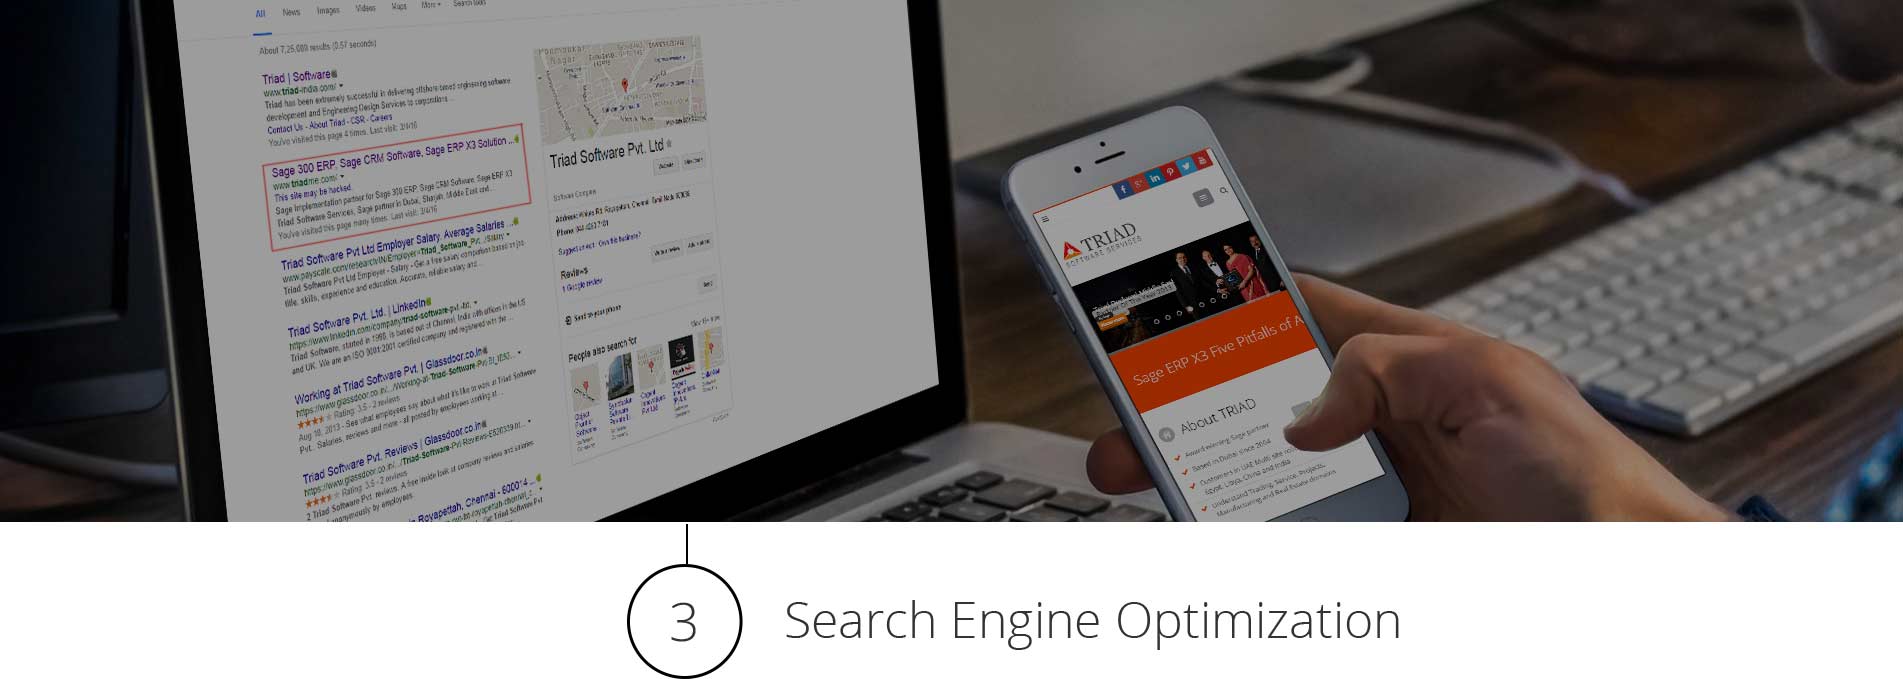 Website Result for Search Engine Optimization